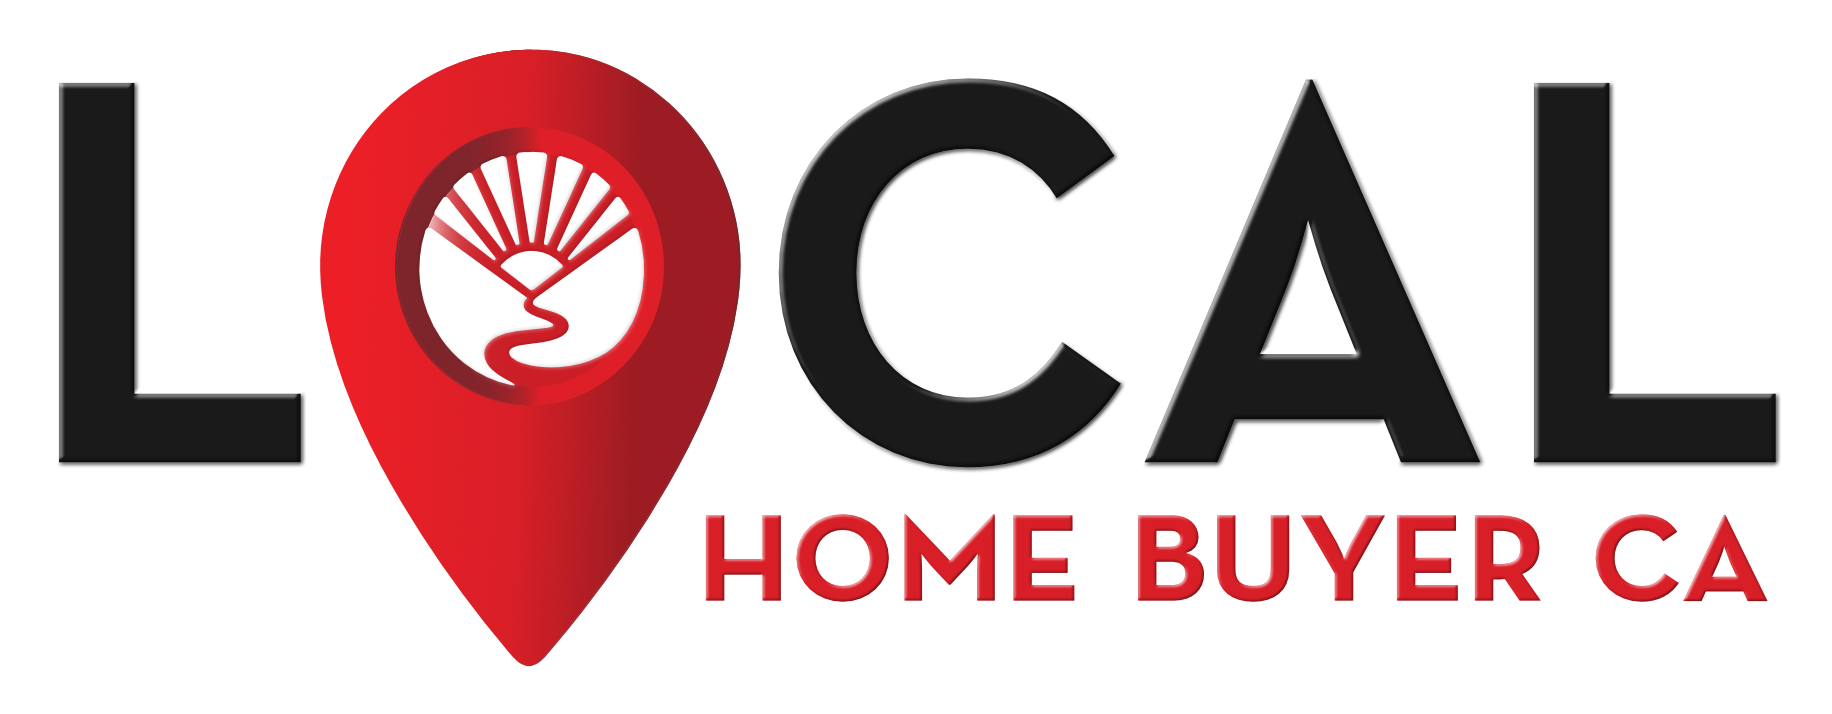 Local Home Buyer CA logo